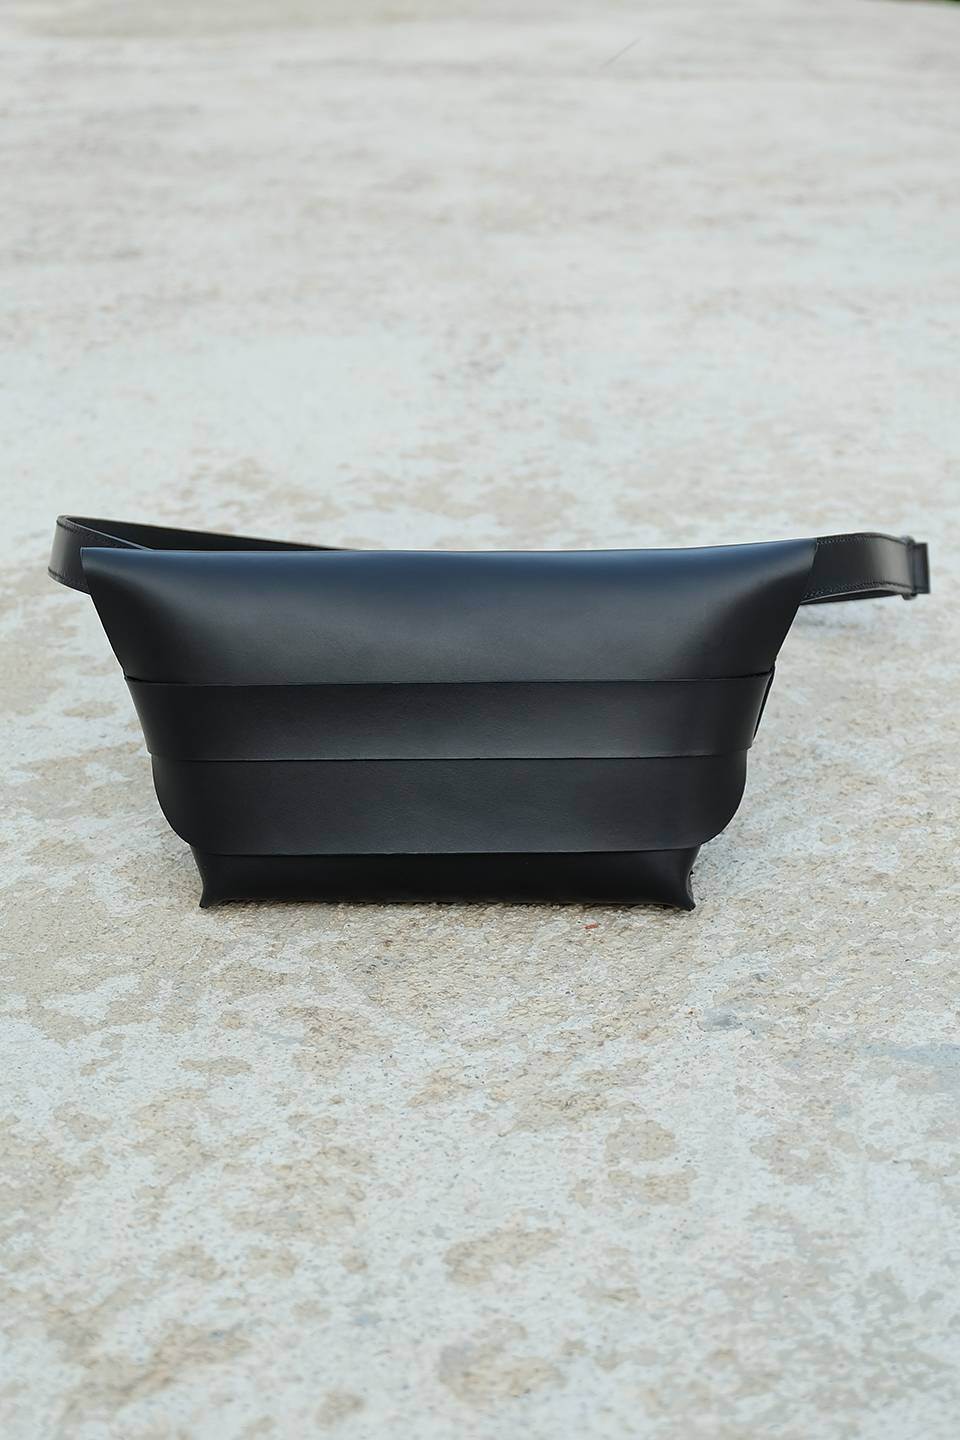 136-belt-bag-vegetable-tanned-calfskin-leather-black-small⎮CLASH BAGS